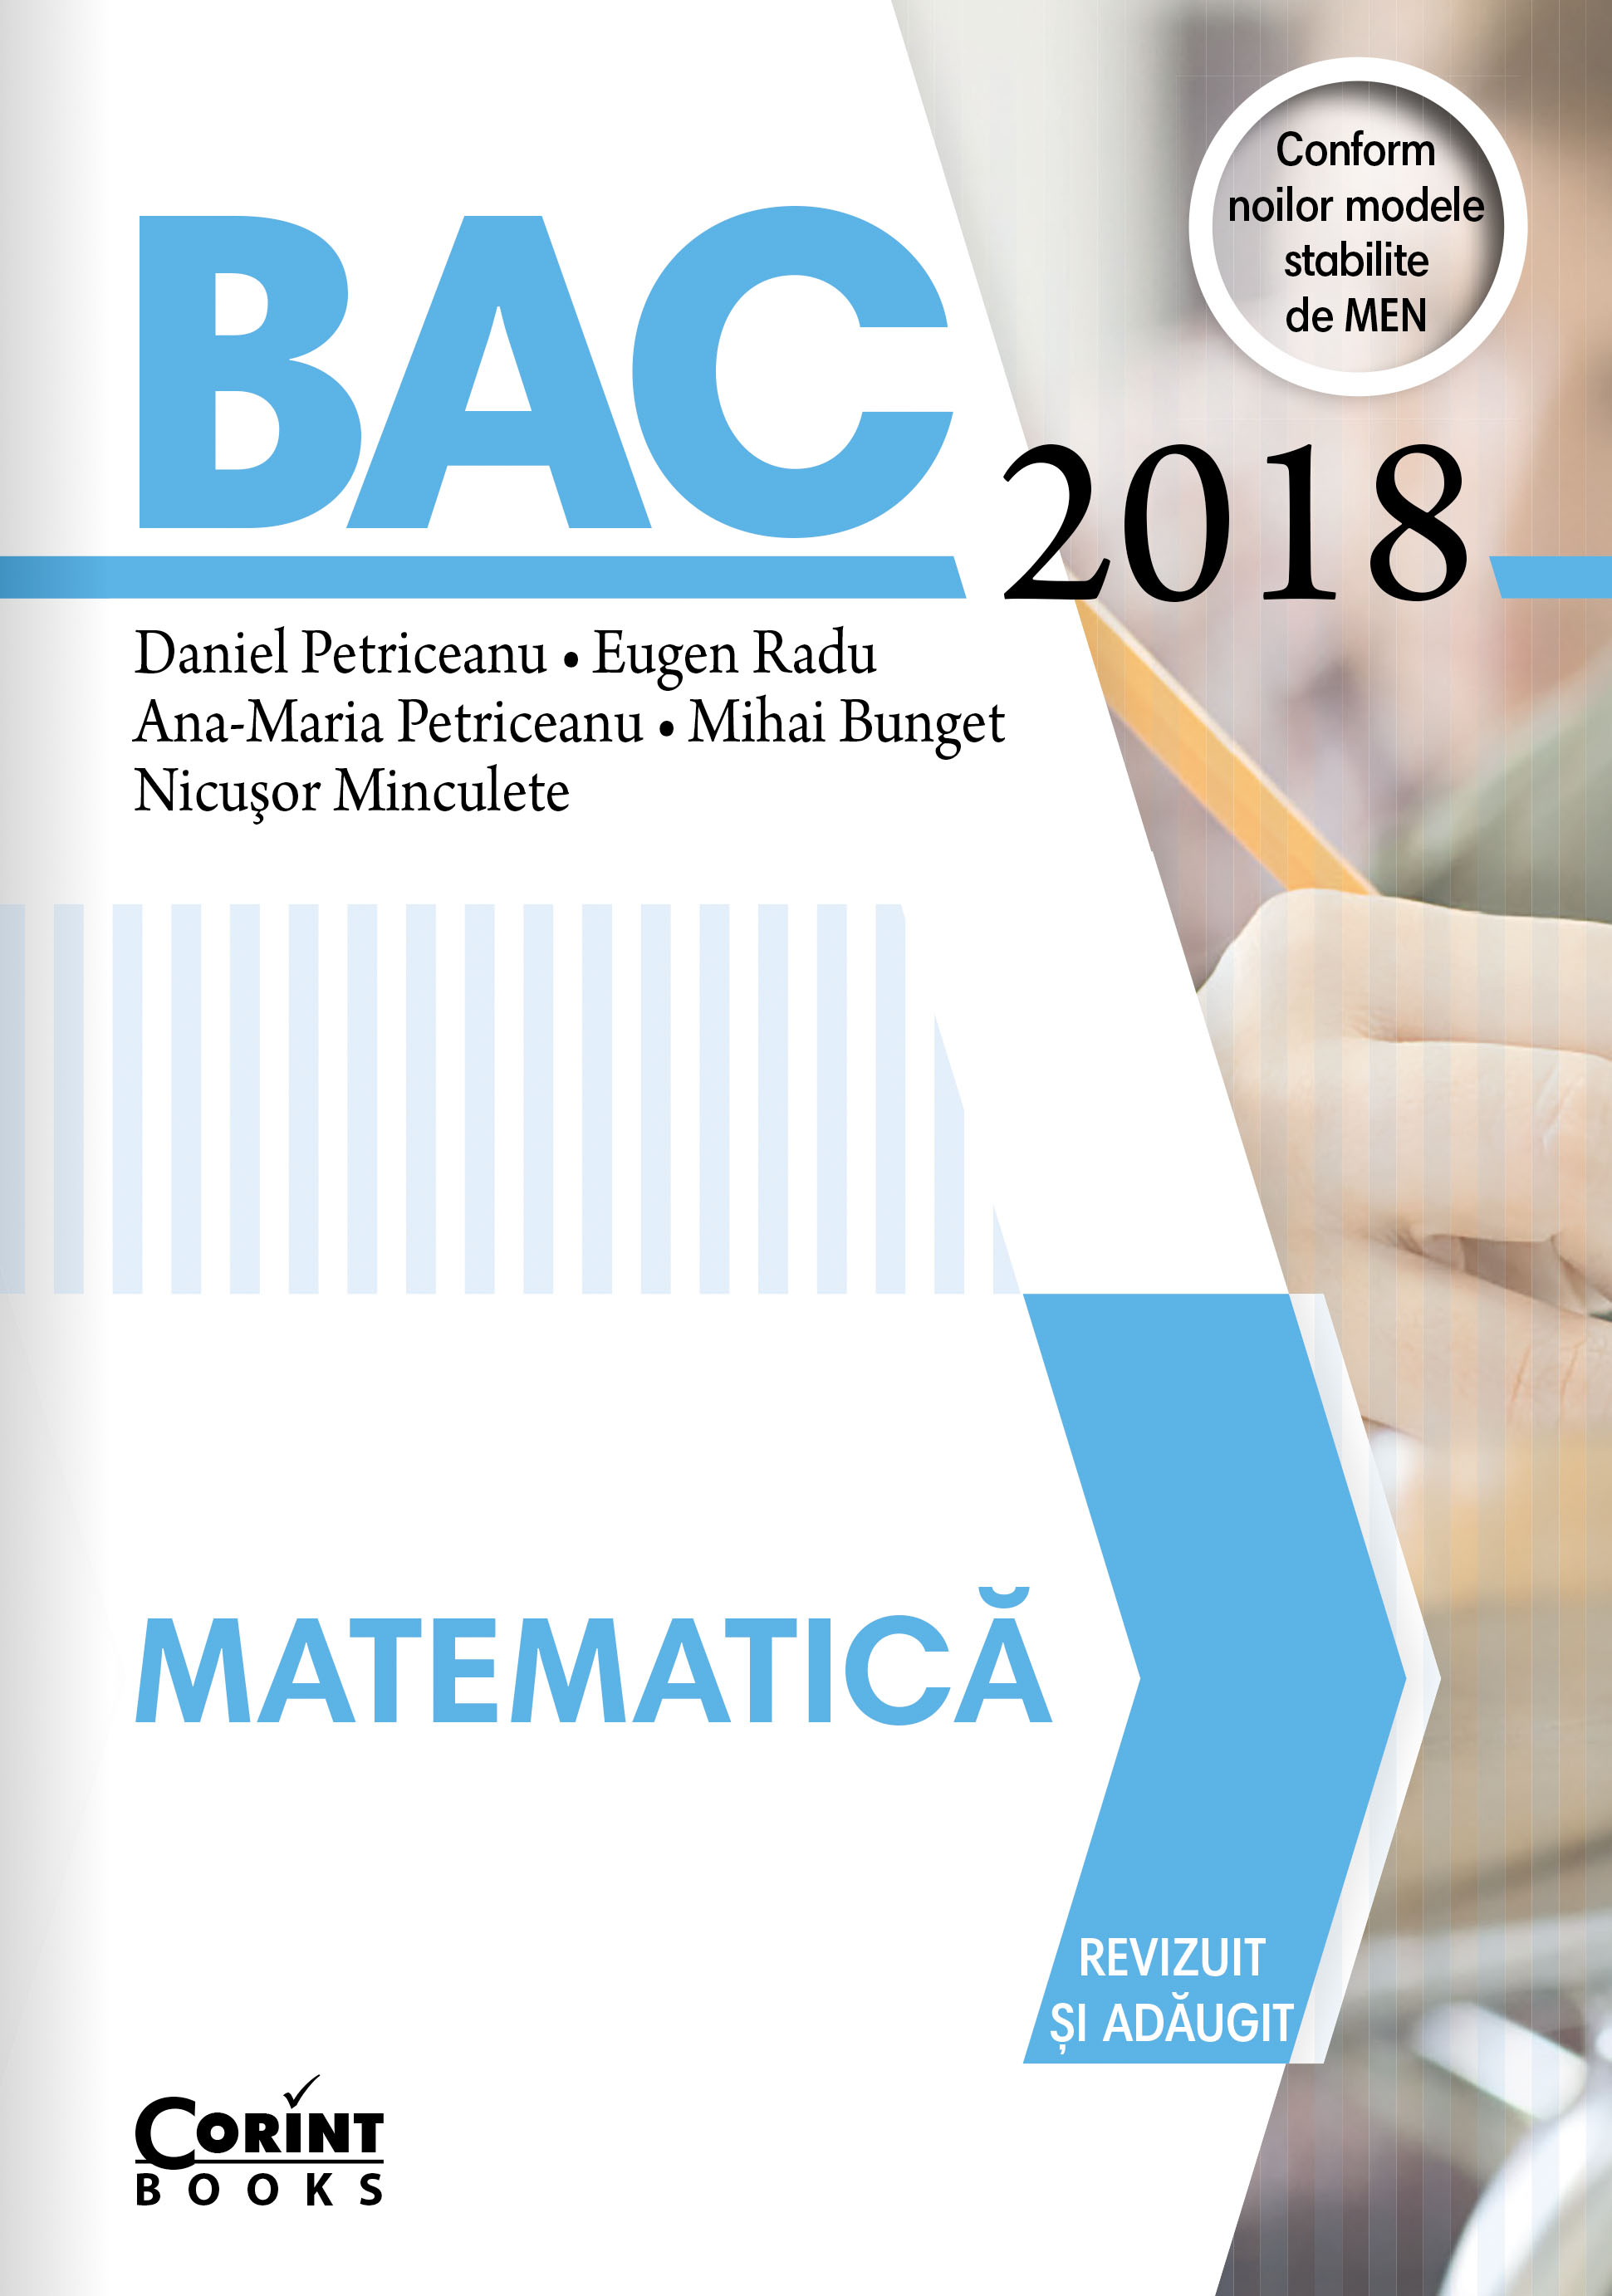 Bacalaureat 2018 - Matematică